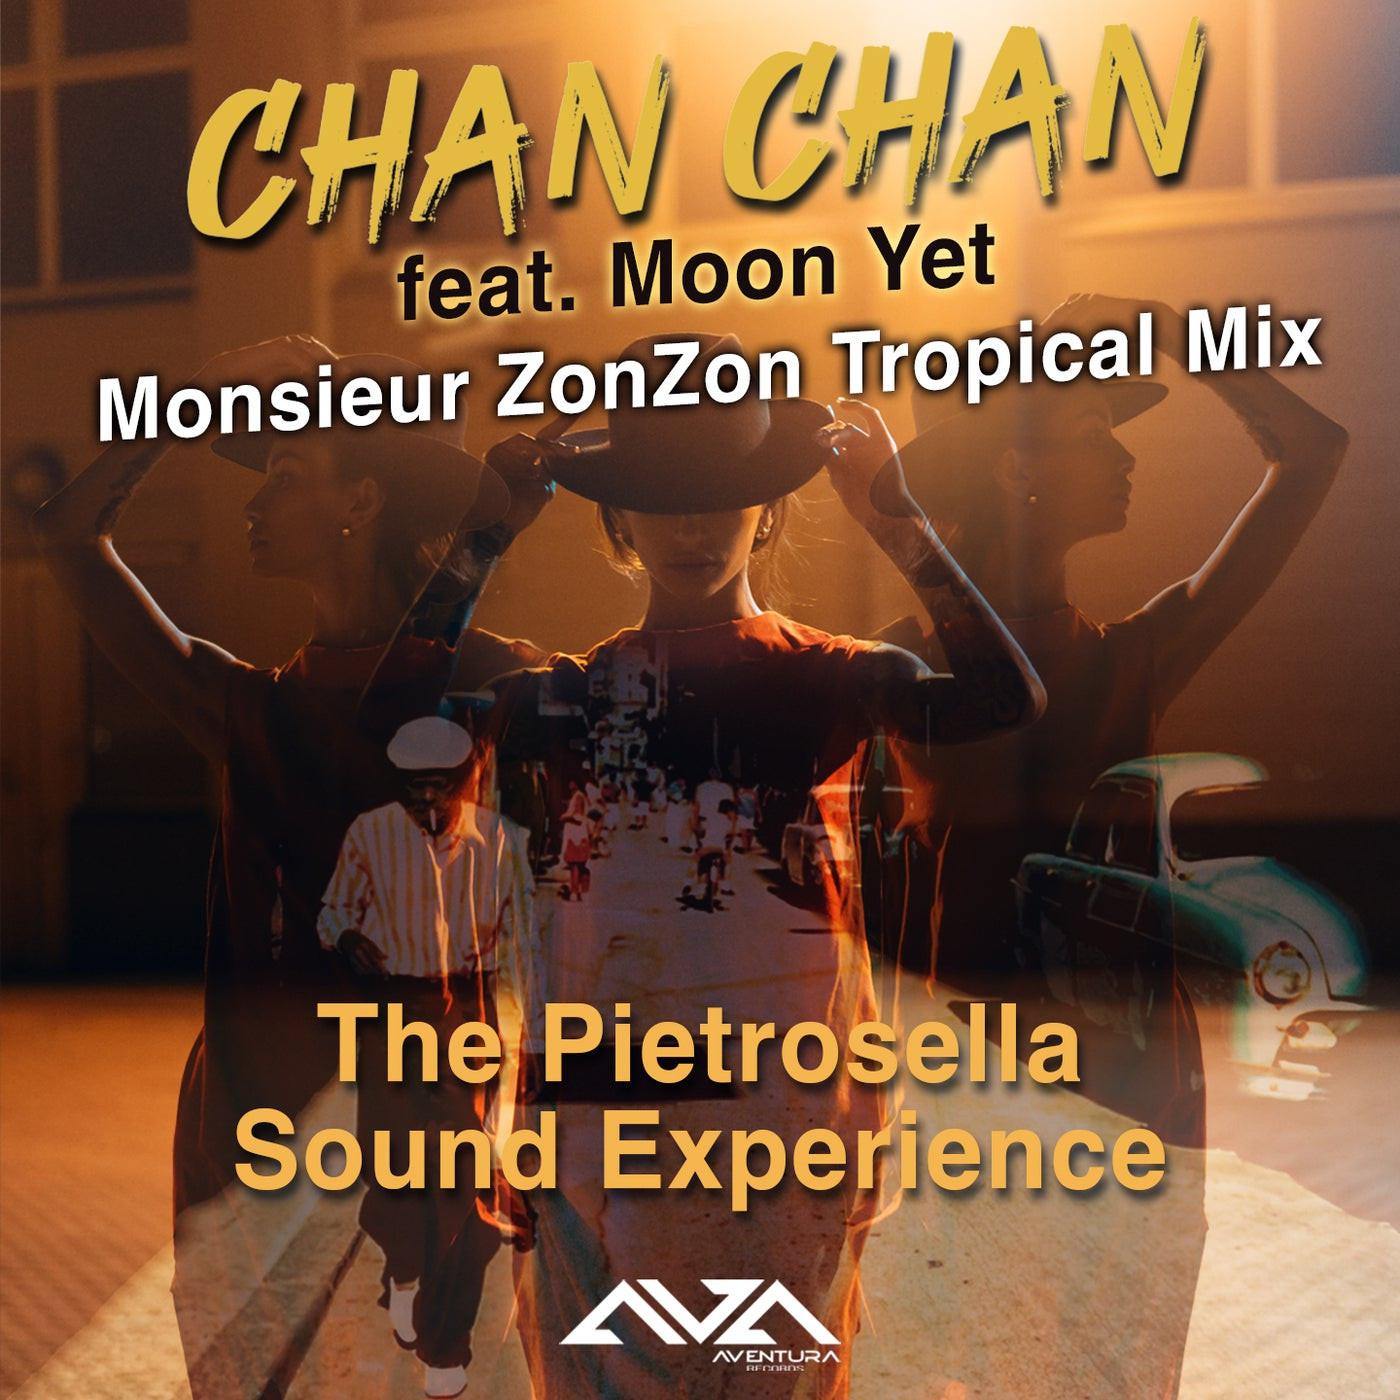 The Pietrosella Sound Experience - Chan Chan (Monsieur Zonzon Tropical Mix)